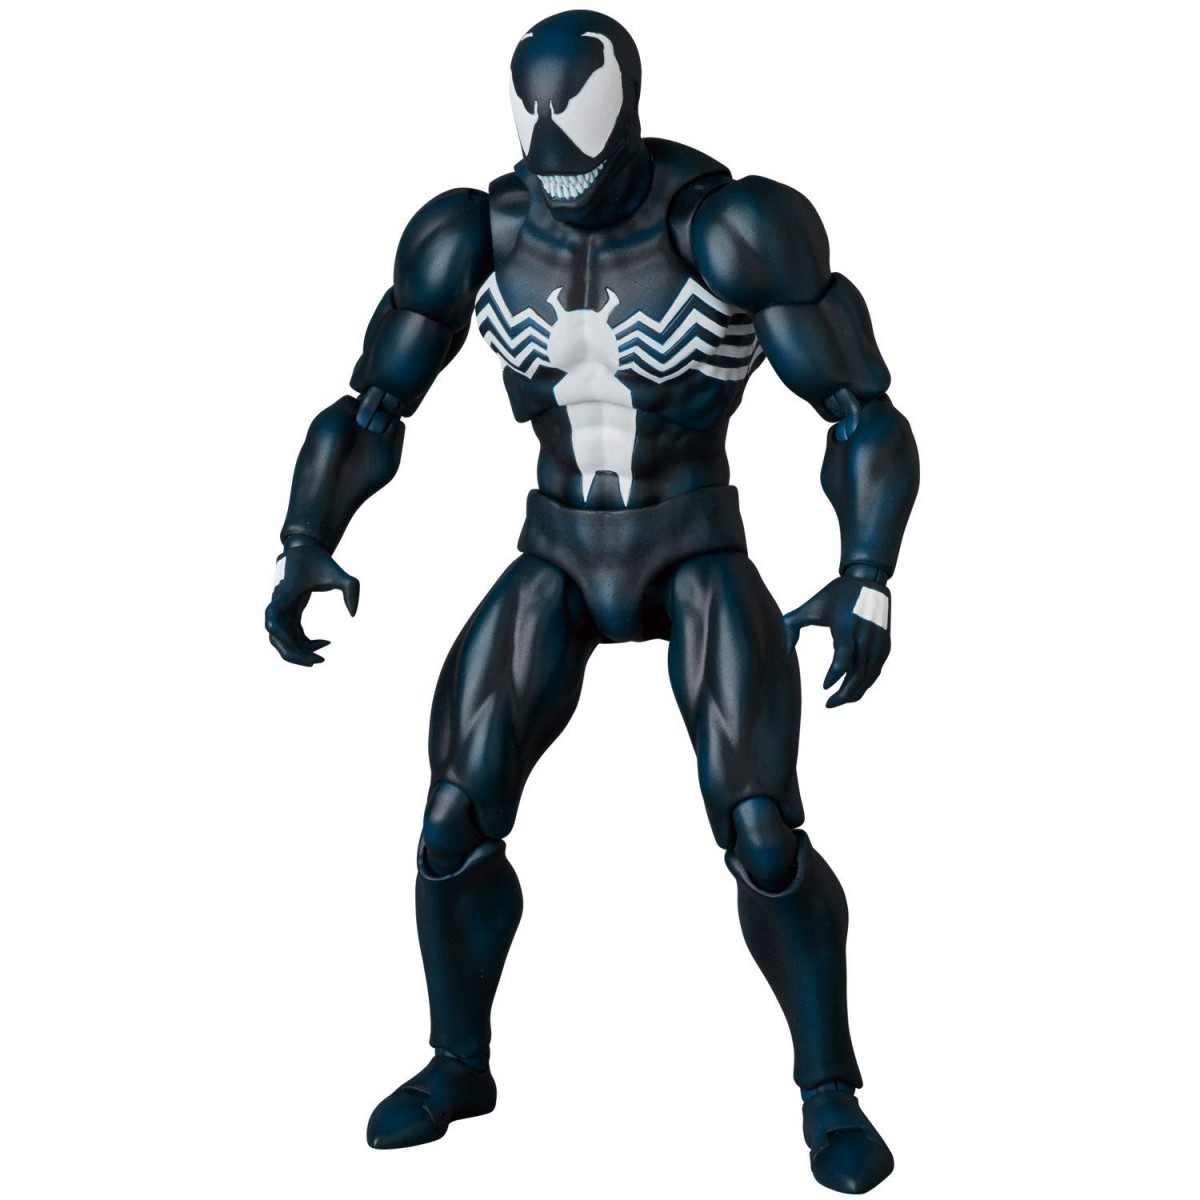 MAFEX Venom Comic Version Action Figure